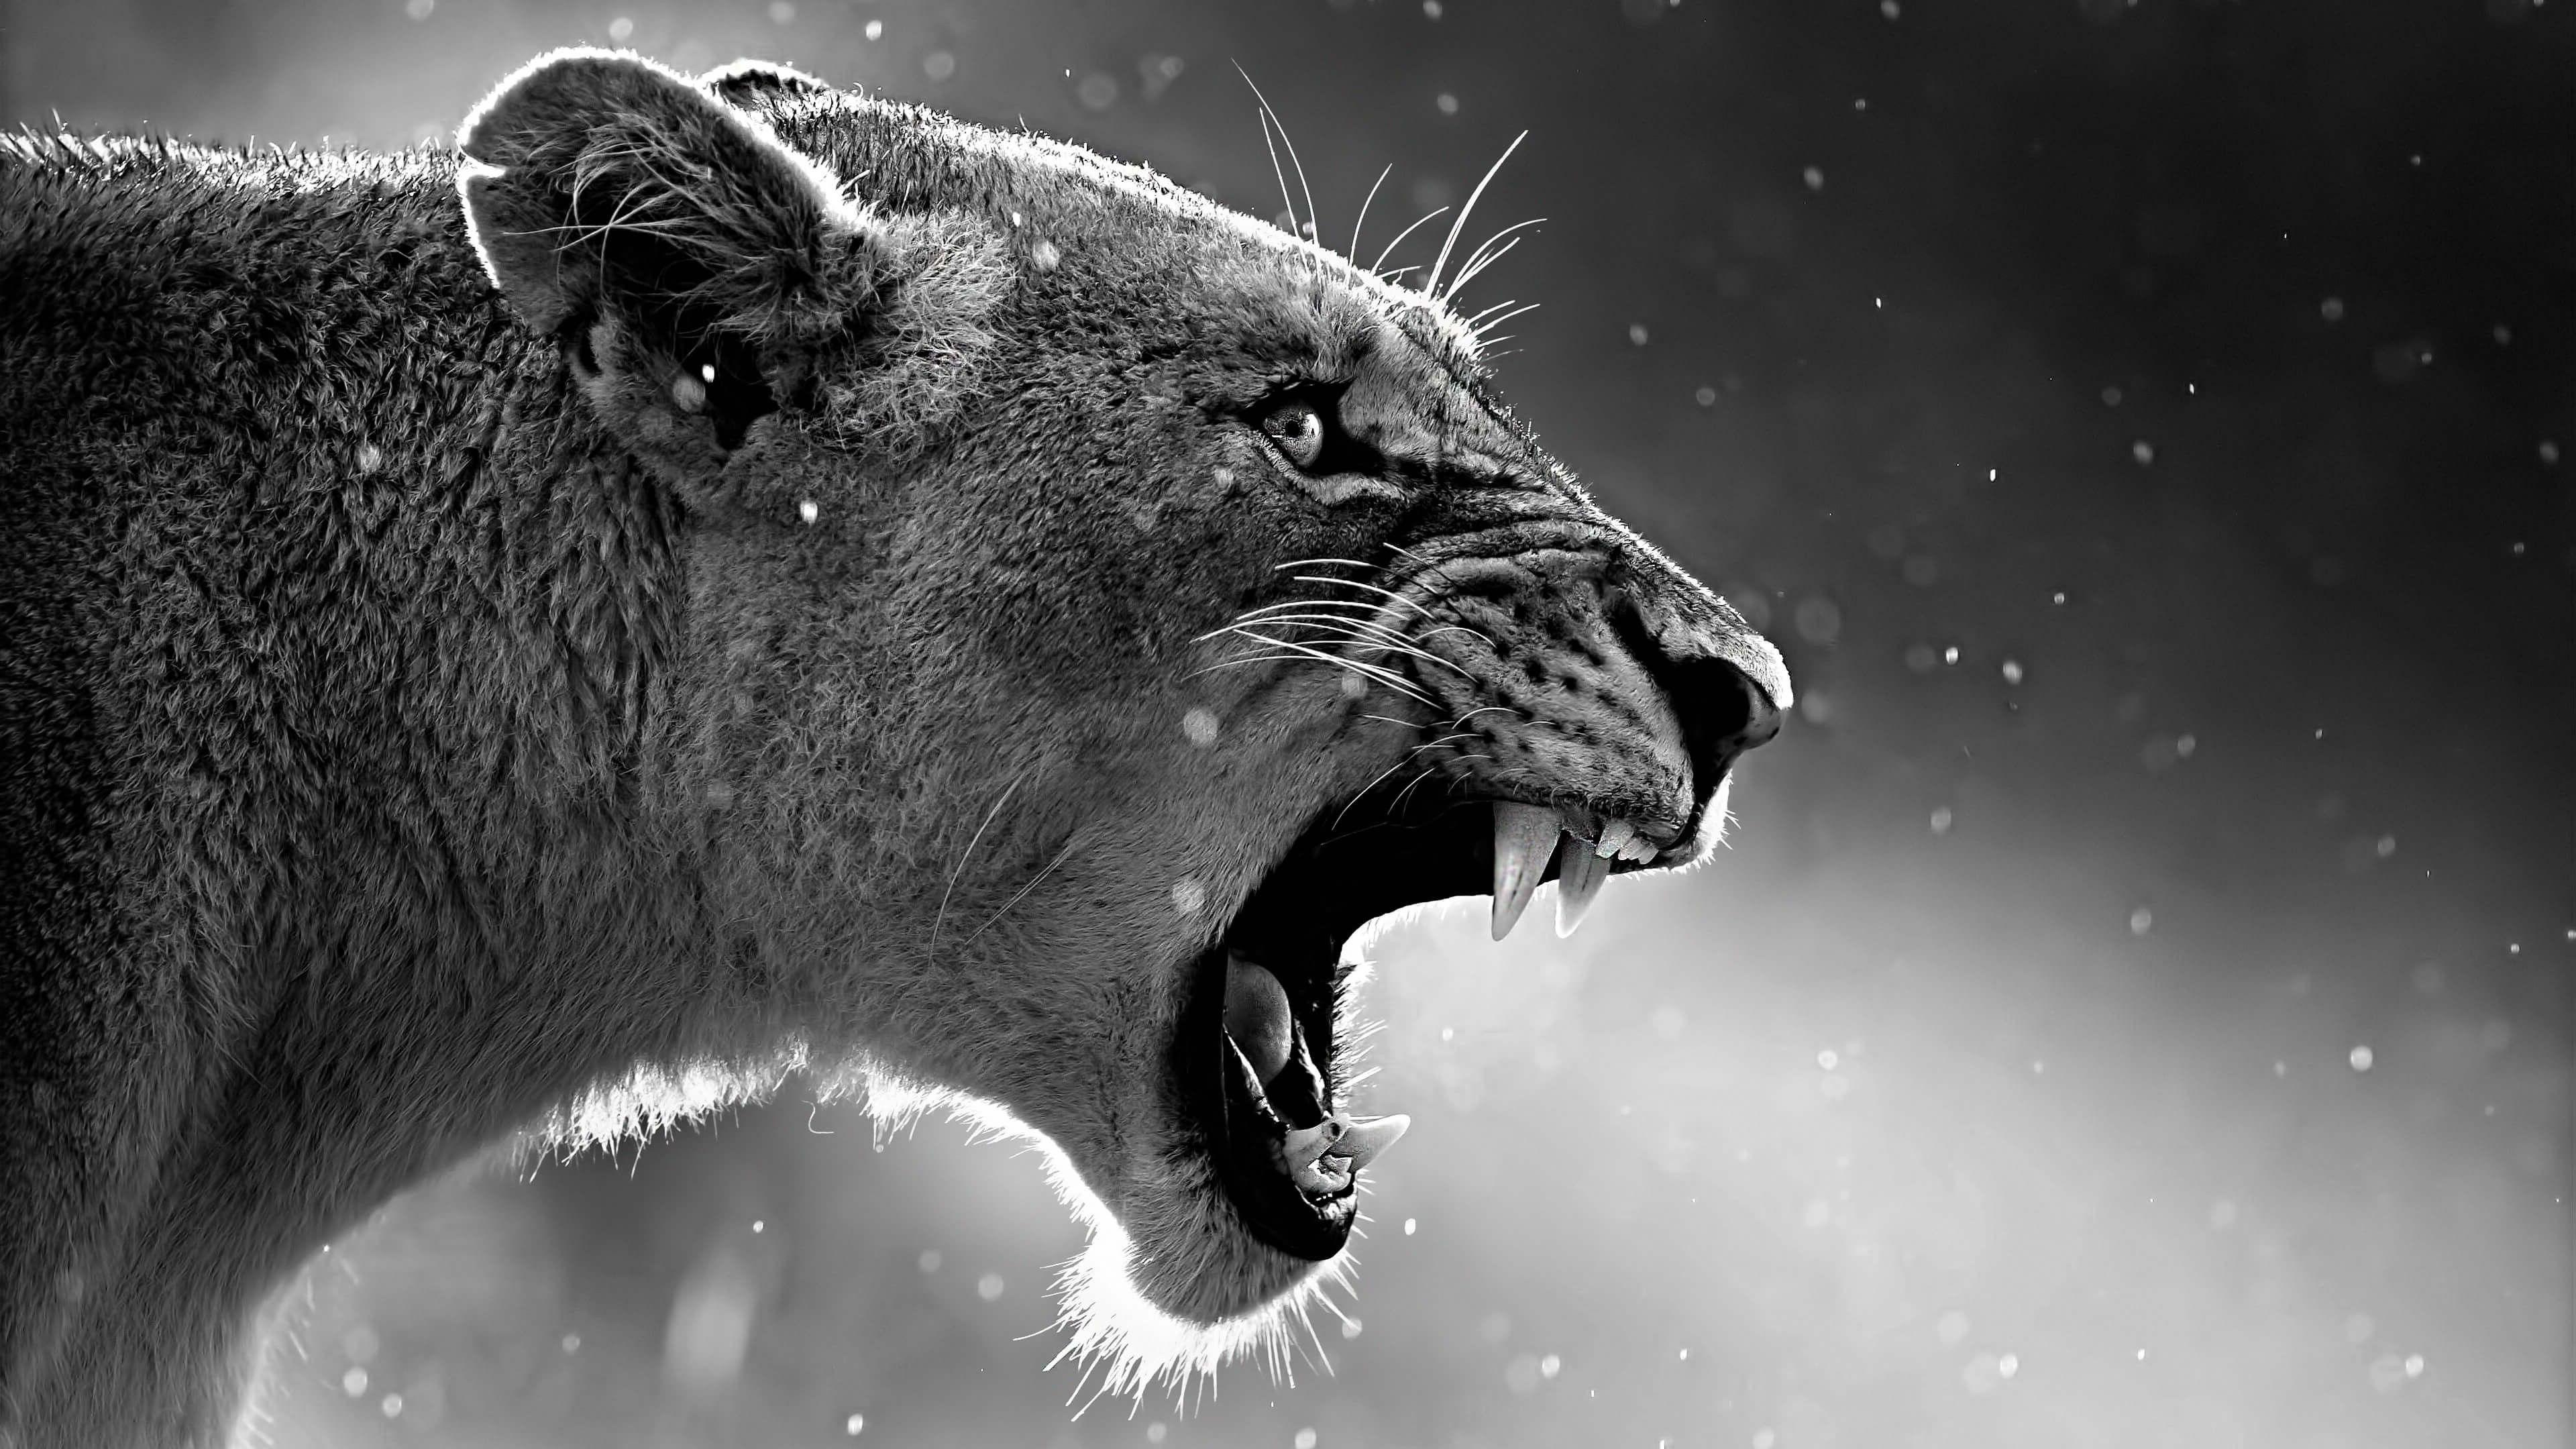 Lion Roaring, HD Animals, 4k Wallpaper, Image, Background, Photo